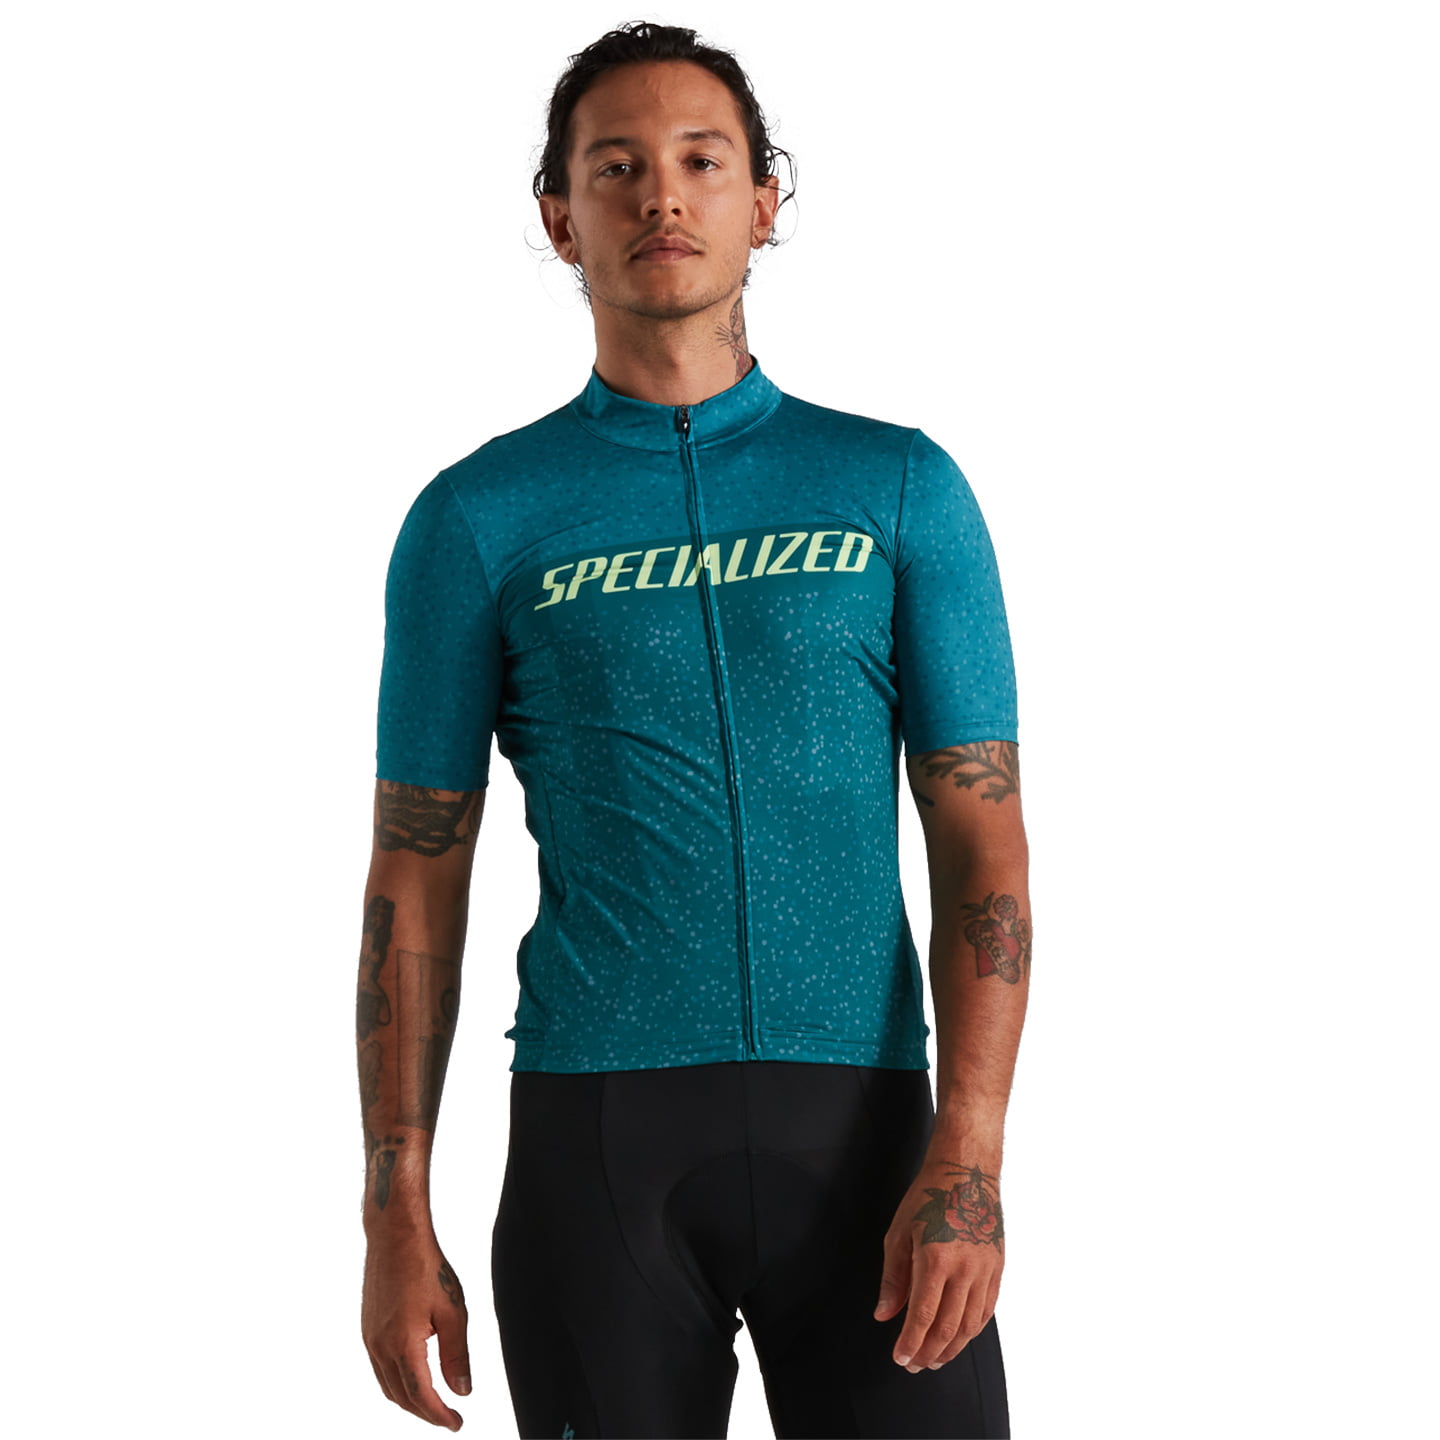 SPECIALIZED RBX Logo Short Sleeve Jersey Short Sleeve Jersey, for men, size M, Cycling jersey, Cycling clothing